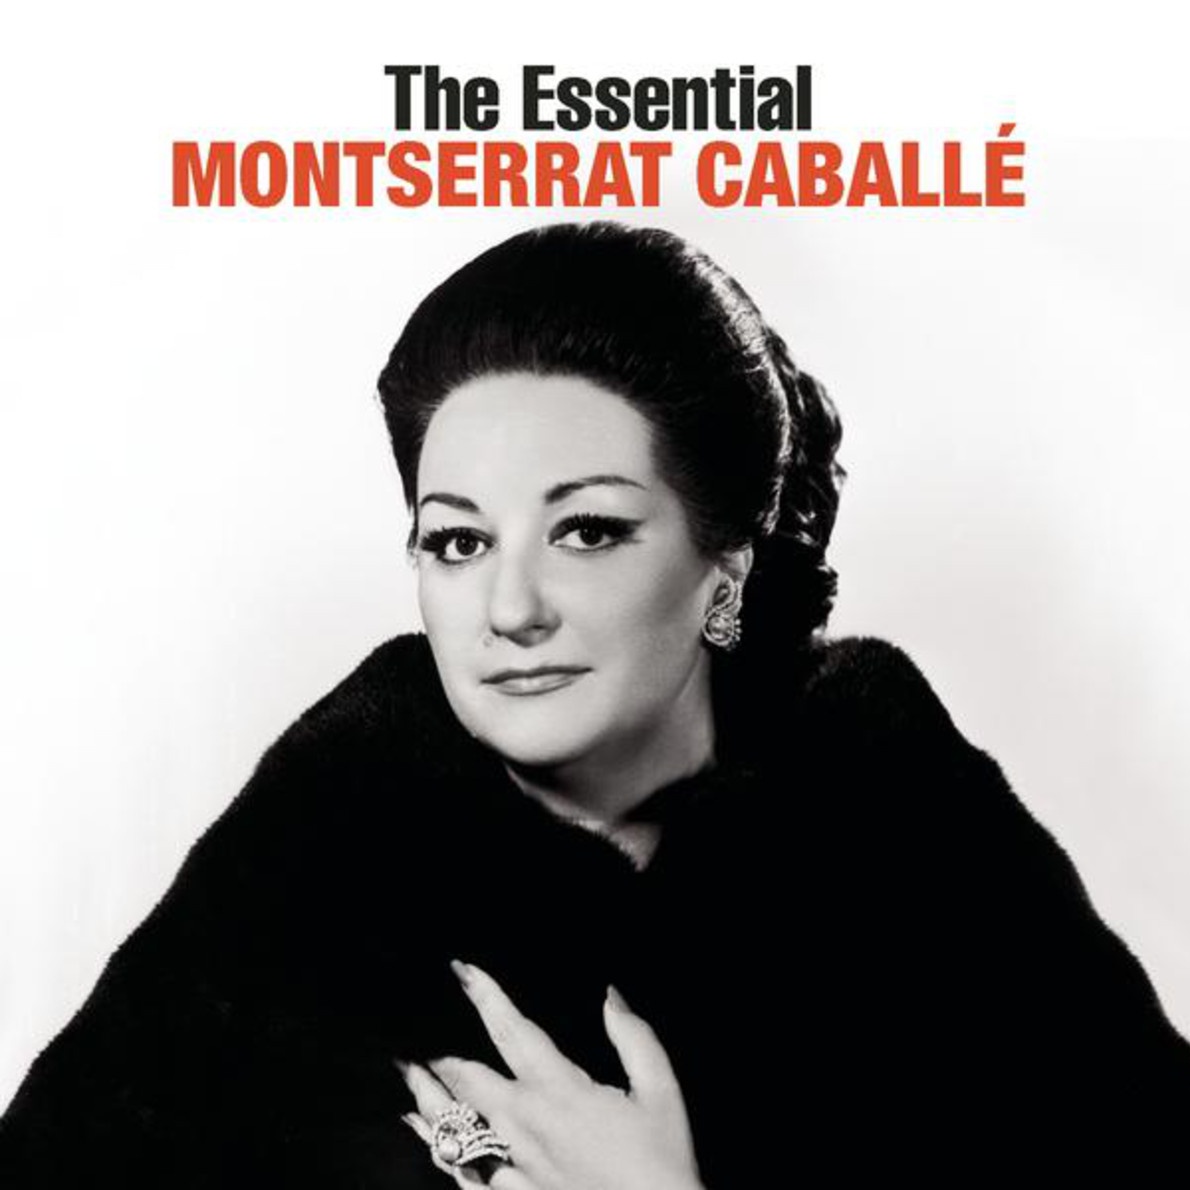 The Essential Montserrat Caballe